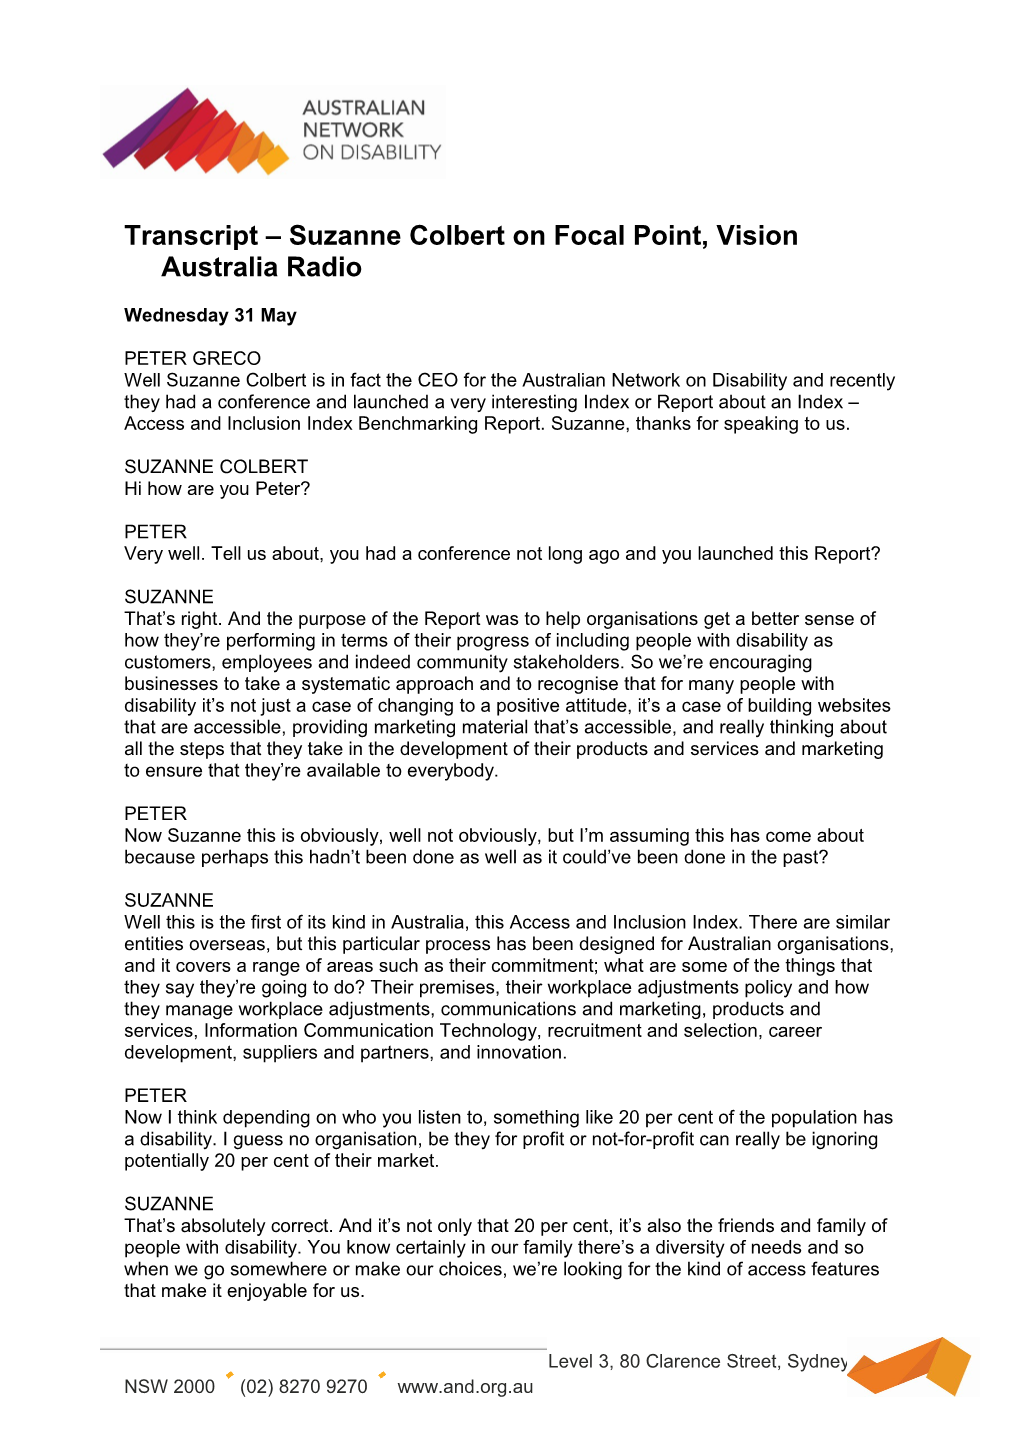 Transcript Suzanne Colbert on Focal Point, Vision Australia Radio